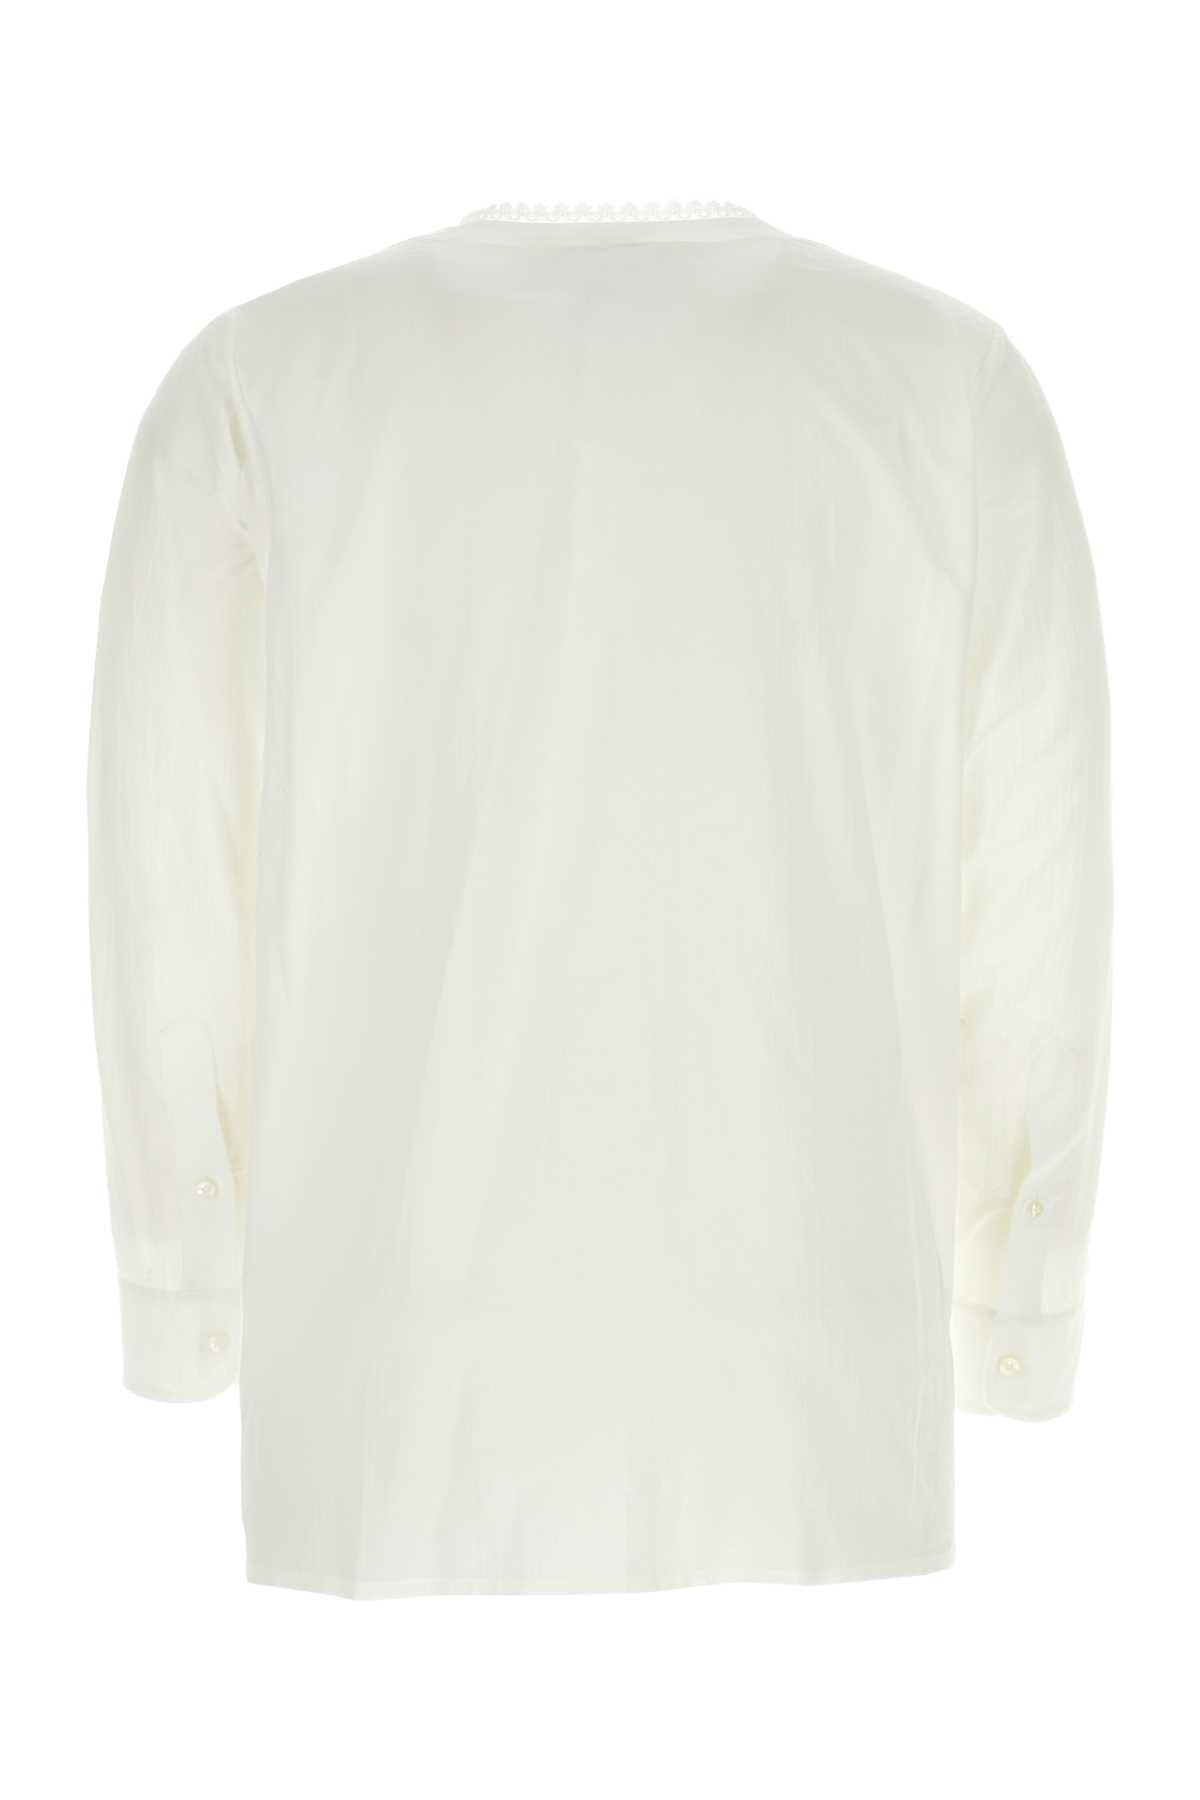 Shop Etro White Cotton Blend Shirt